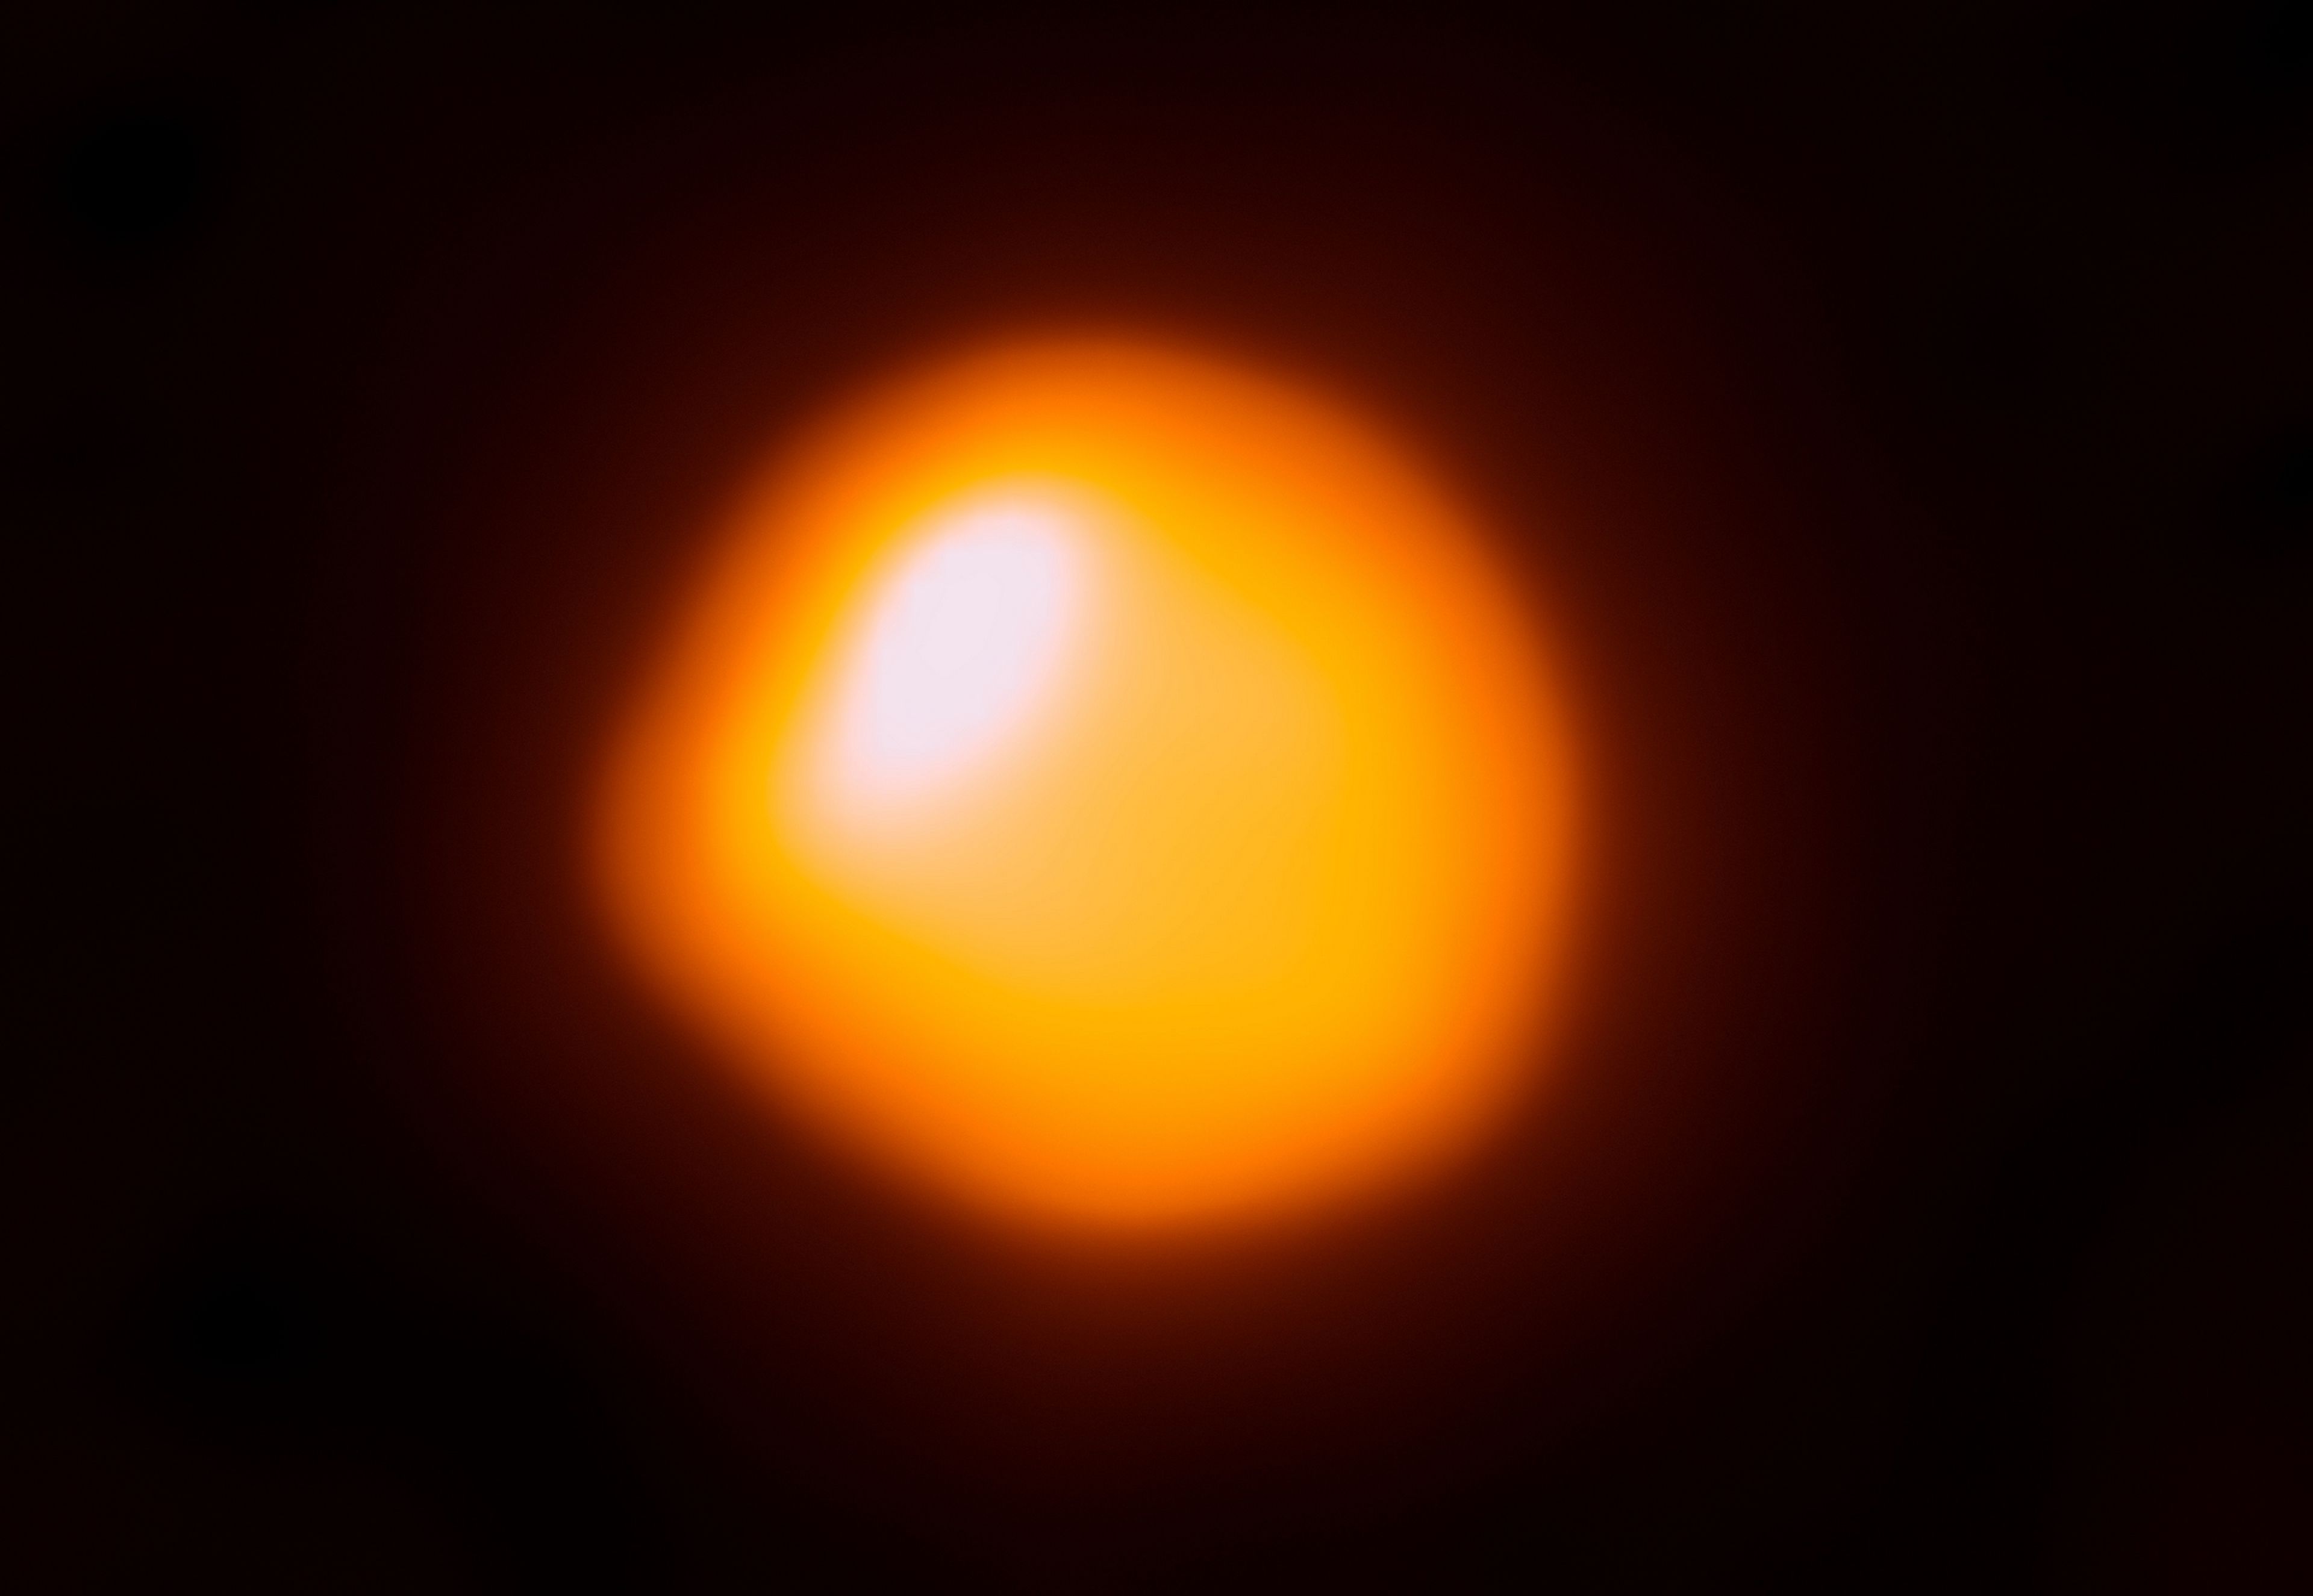 La estrella supergigante roja, Betelgeuse